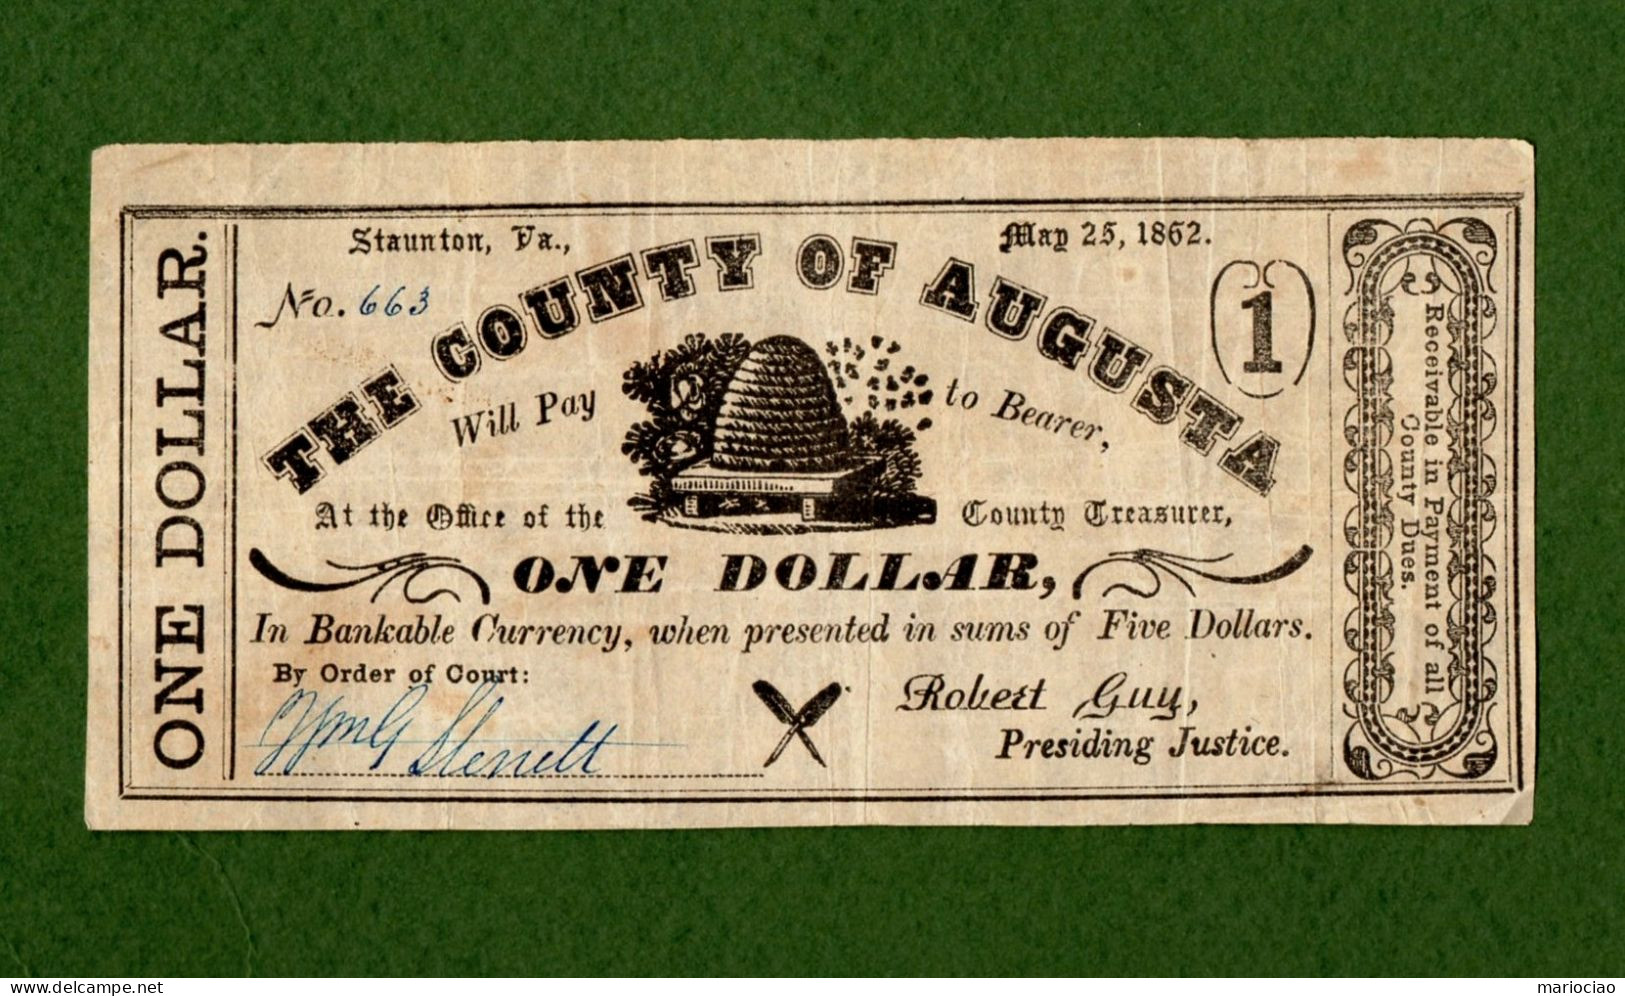 USA Note CIVIL WAR ERA THE COUNTY OF AUGUSTA $1 Staunton, Virginia 1862 N. 663 - Confederate Currency (1861-1864)